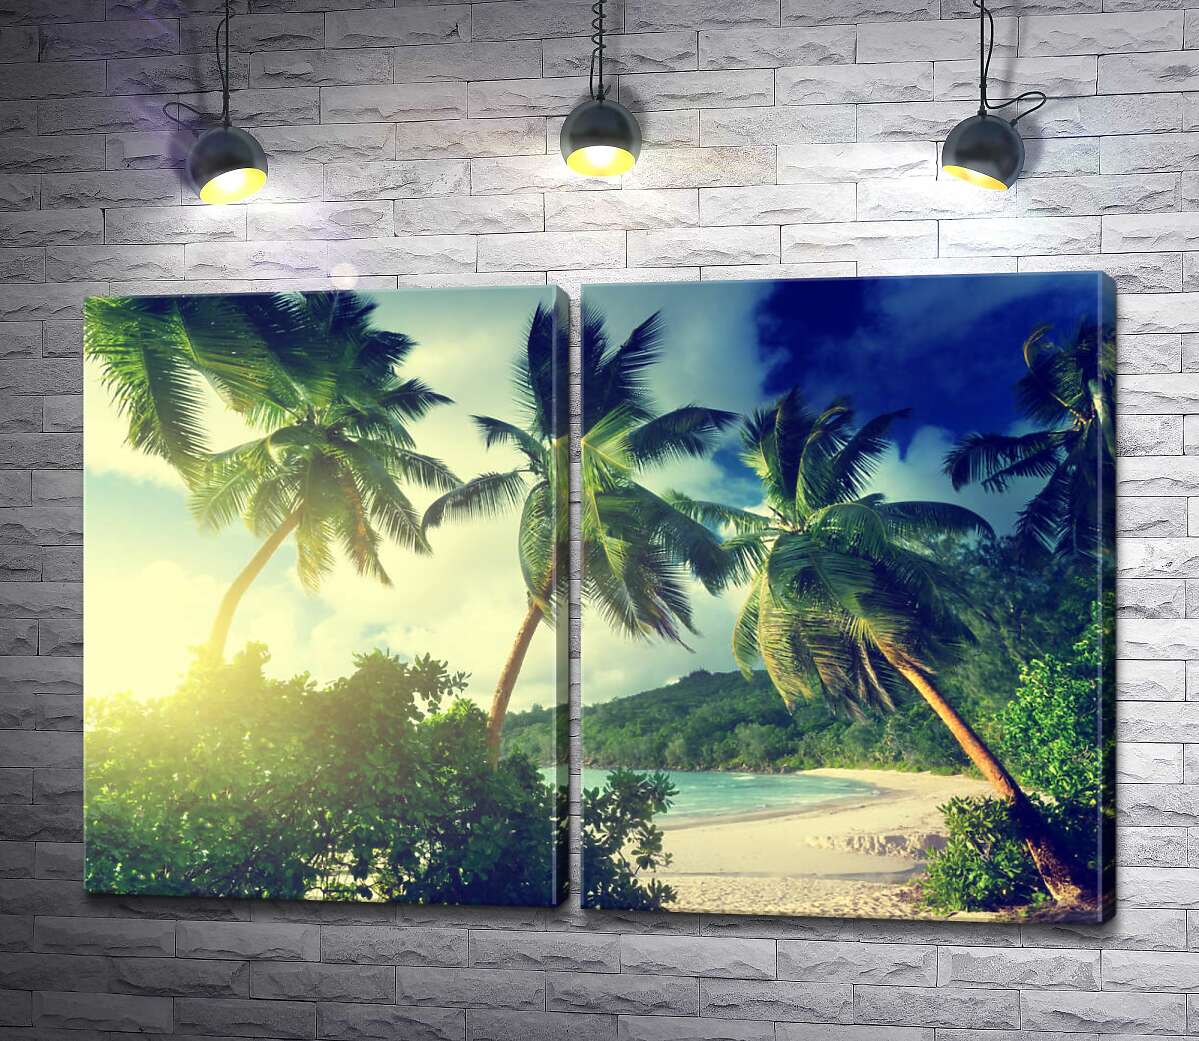 модульна картина Сонячний пляж сховався за зеленими кущами та пальмами